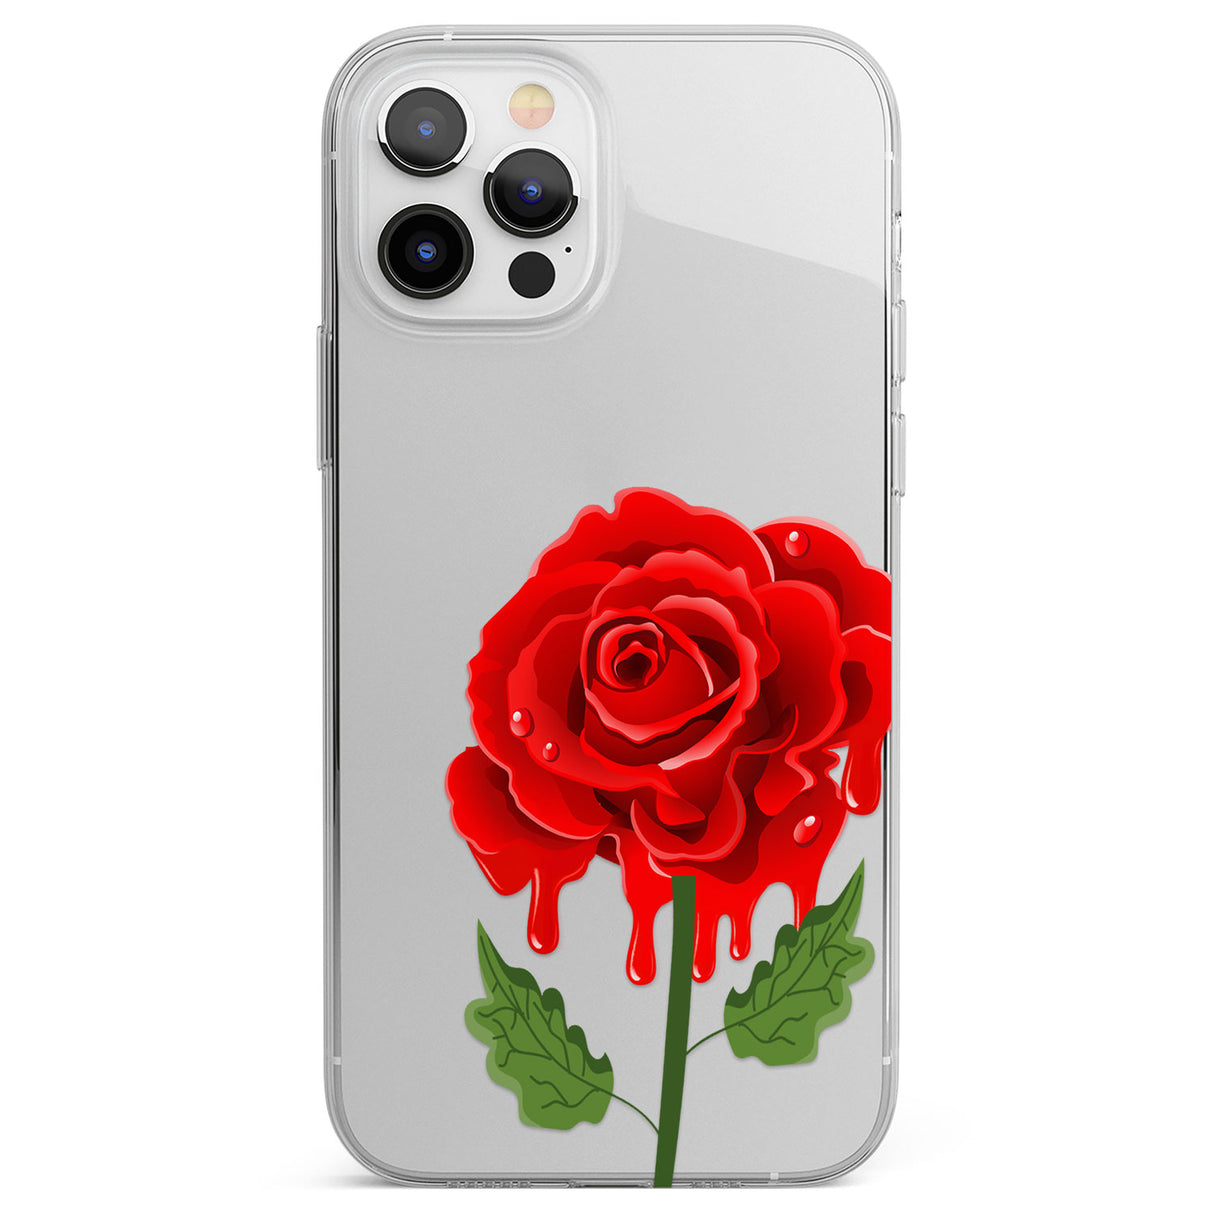 Melting Rose Phone Case for iPhone 12 Pro